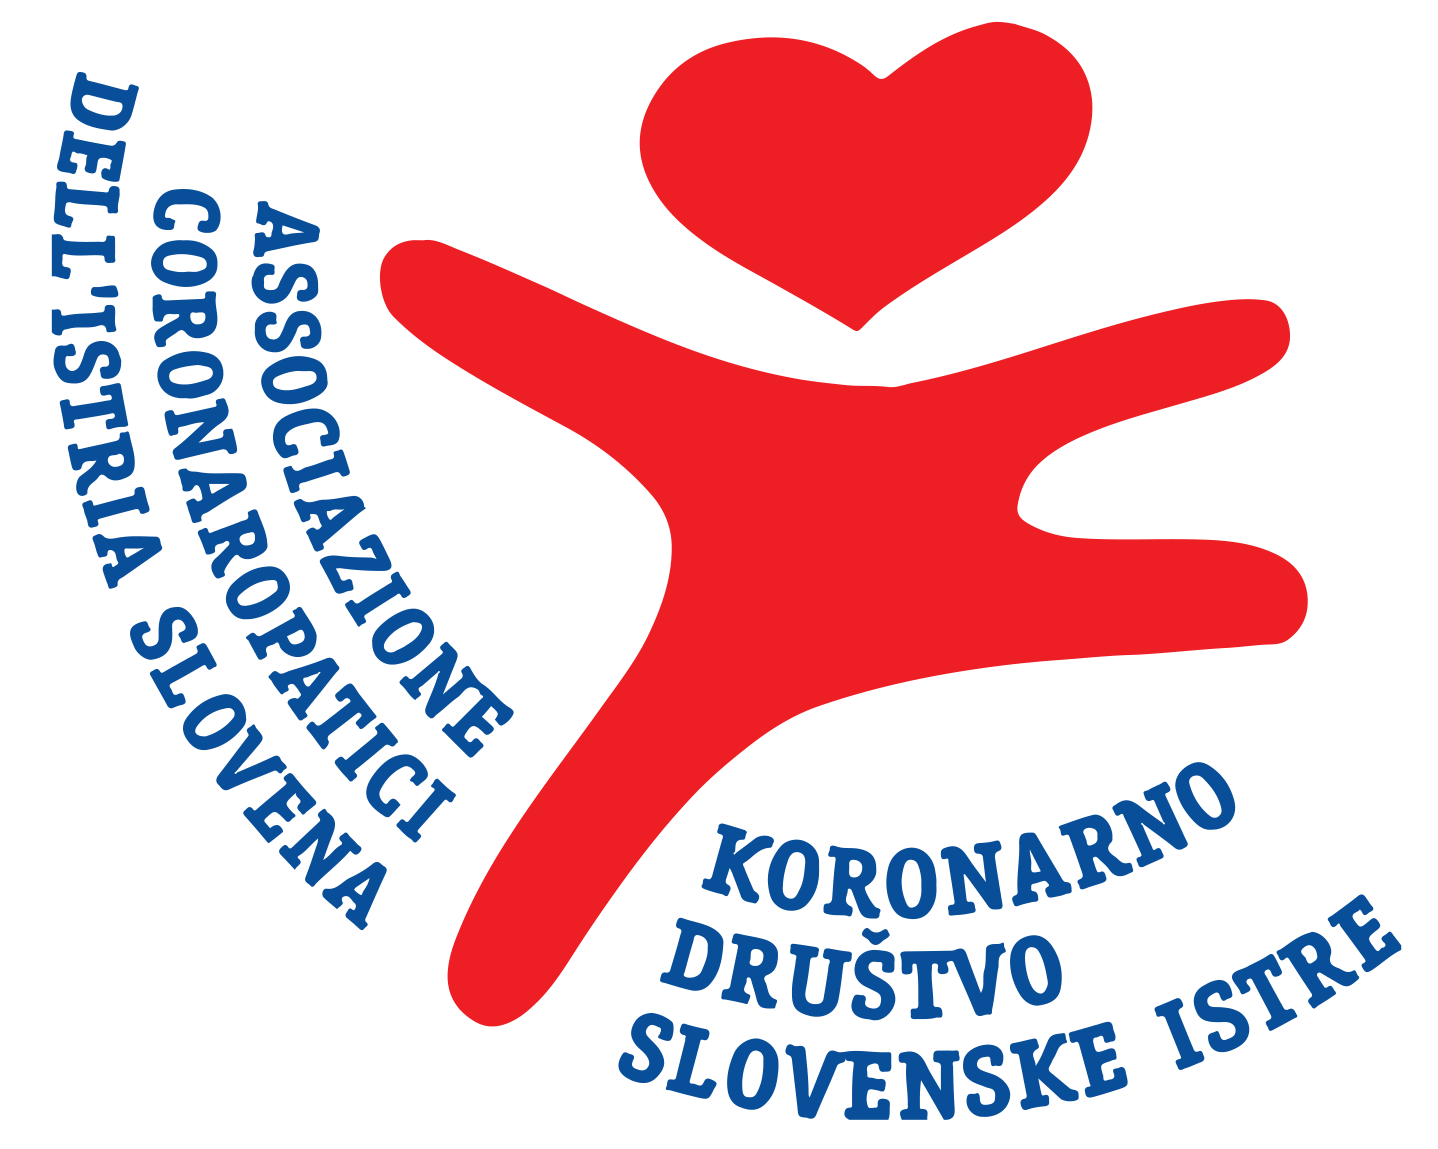 Koronarno društvo slovenske Istre